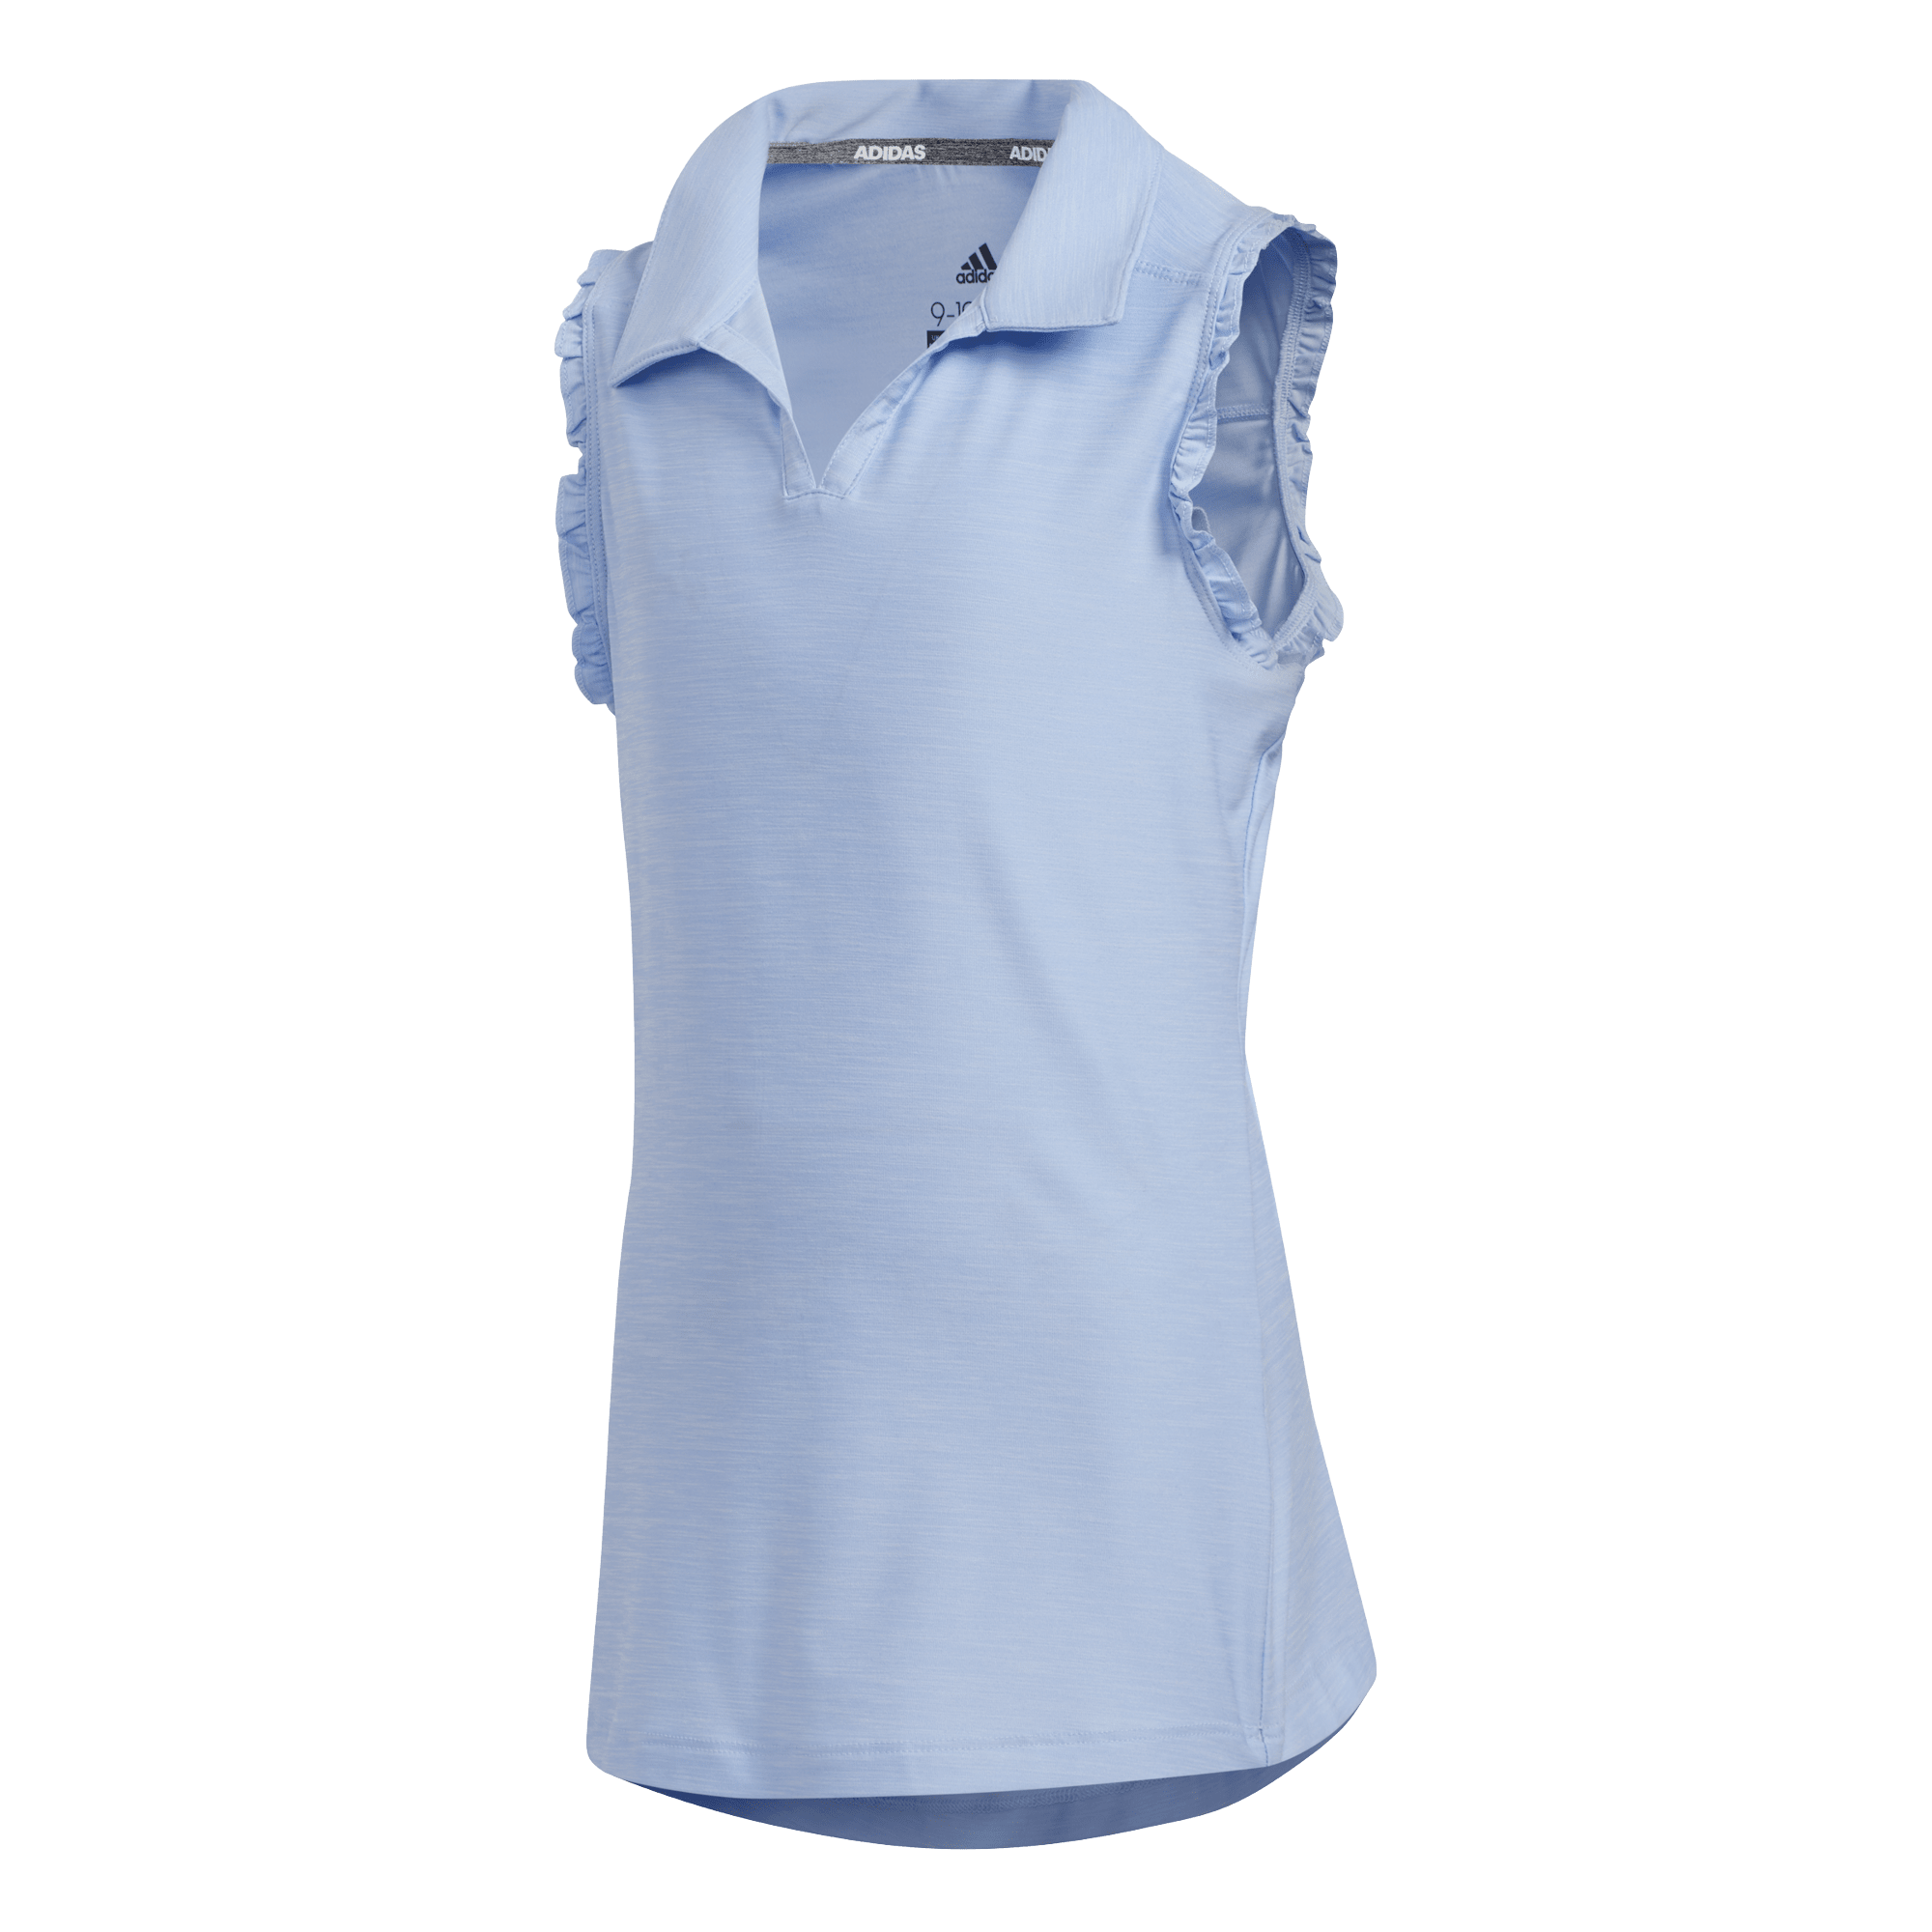 sleeveless golf polo shirts